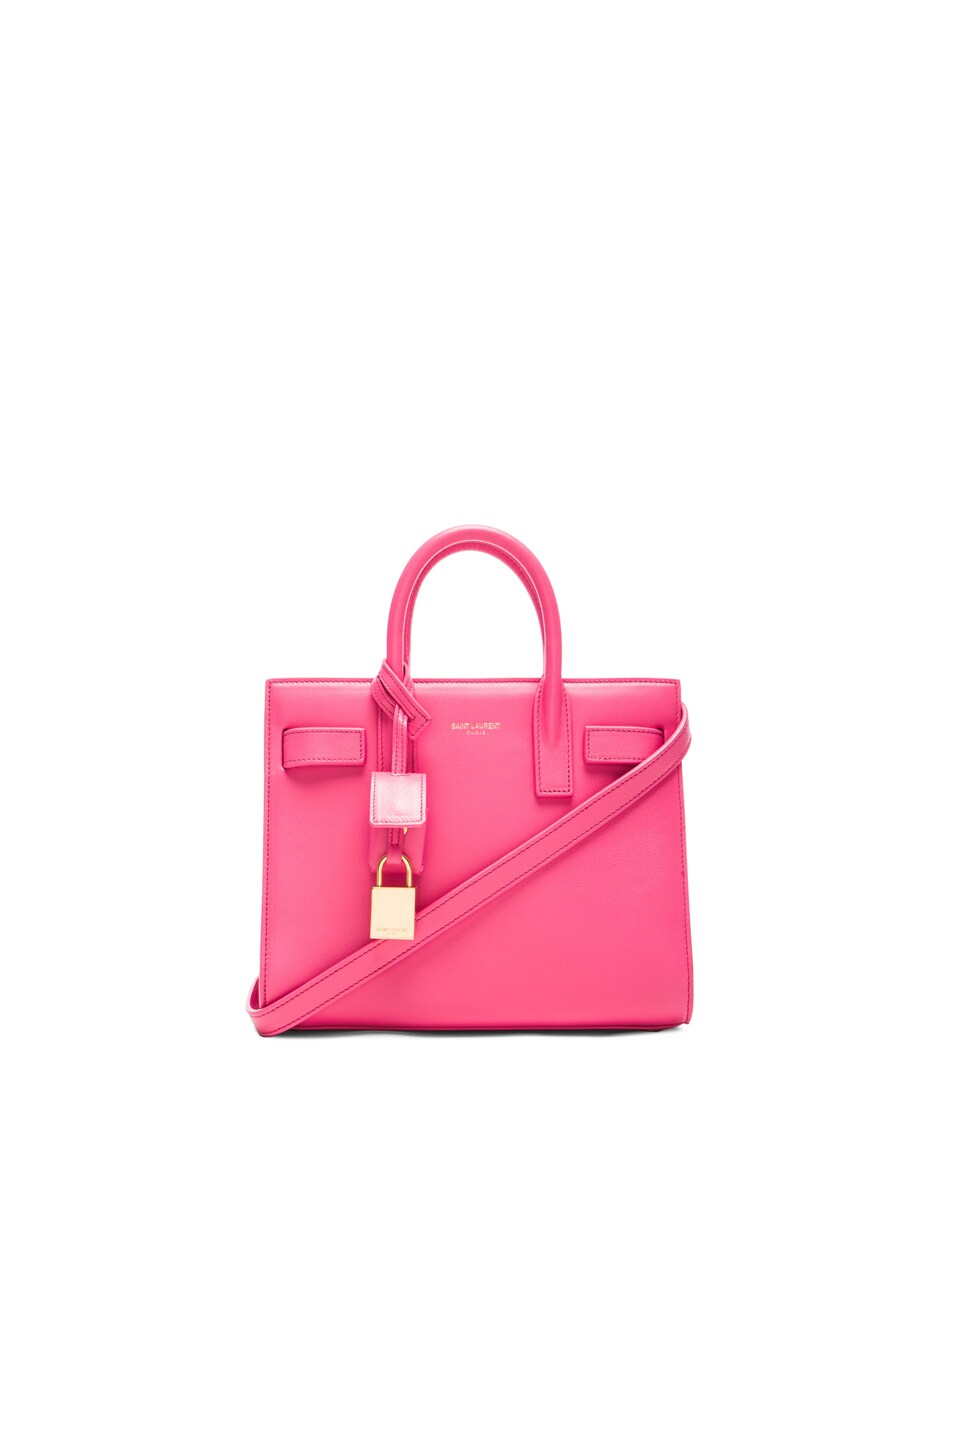 Saint Laurent Nano Sac De Jour Carryall Bag in Lipstick Pink | FWRD